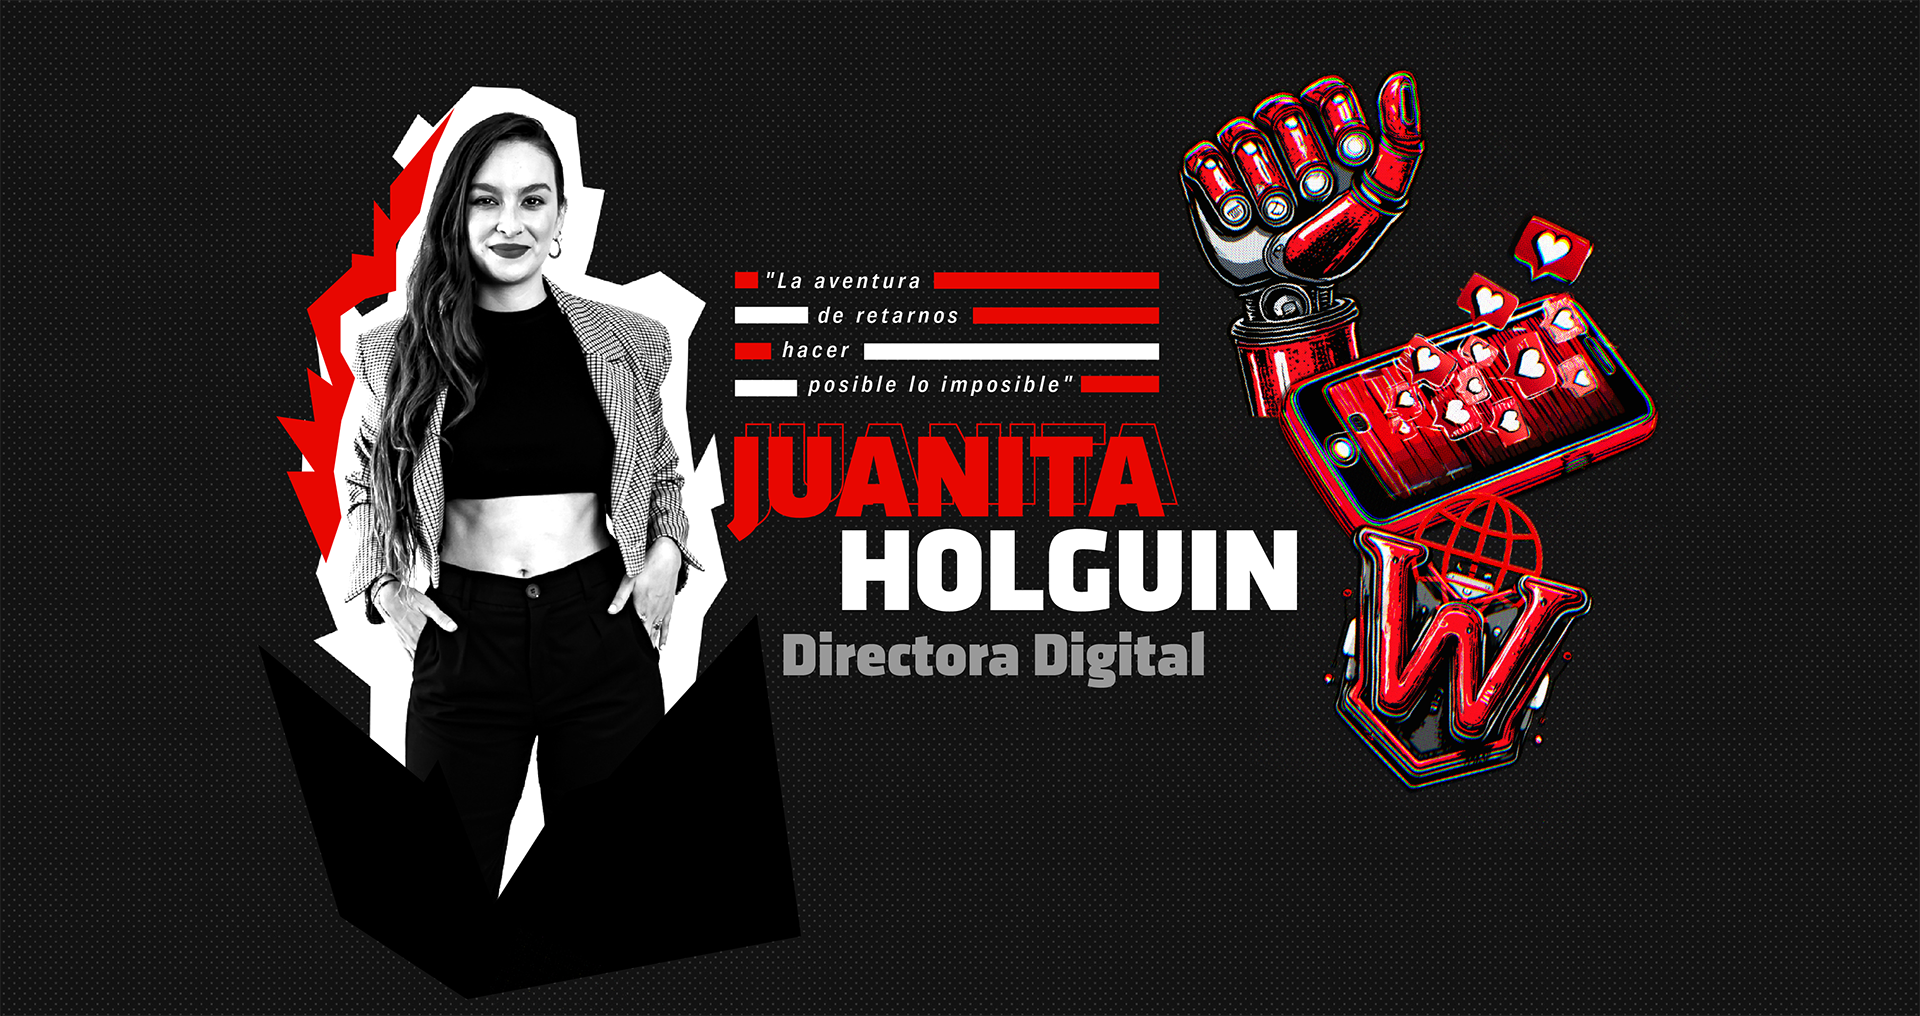 Juanita Holguin